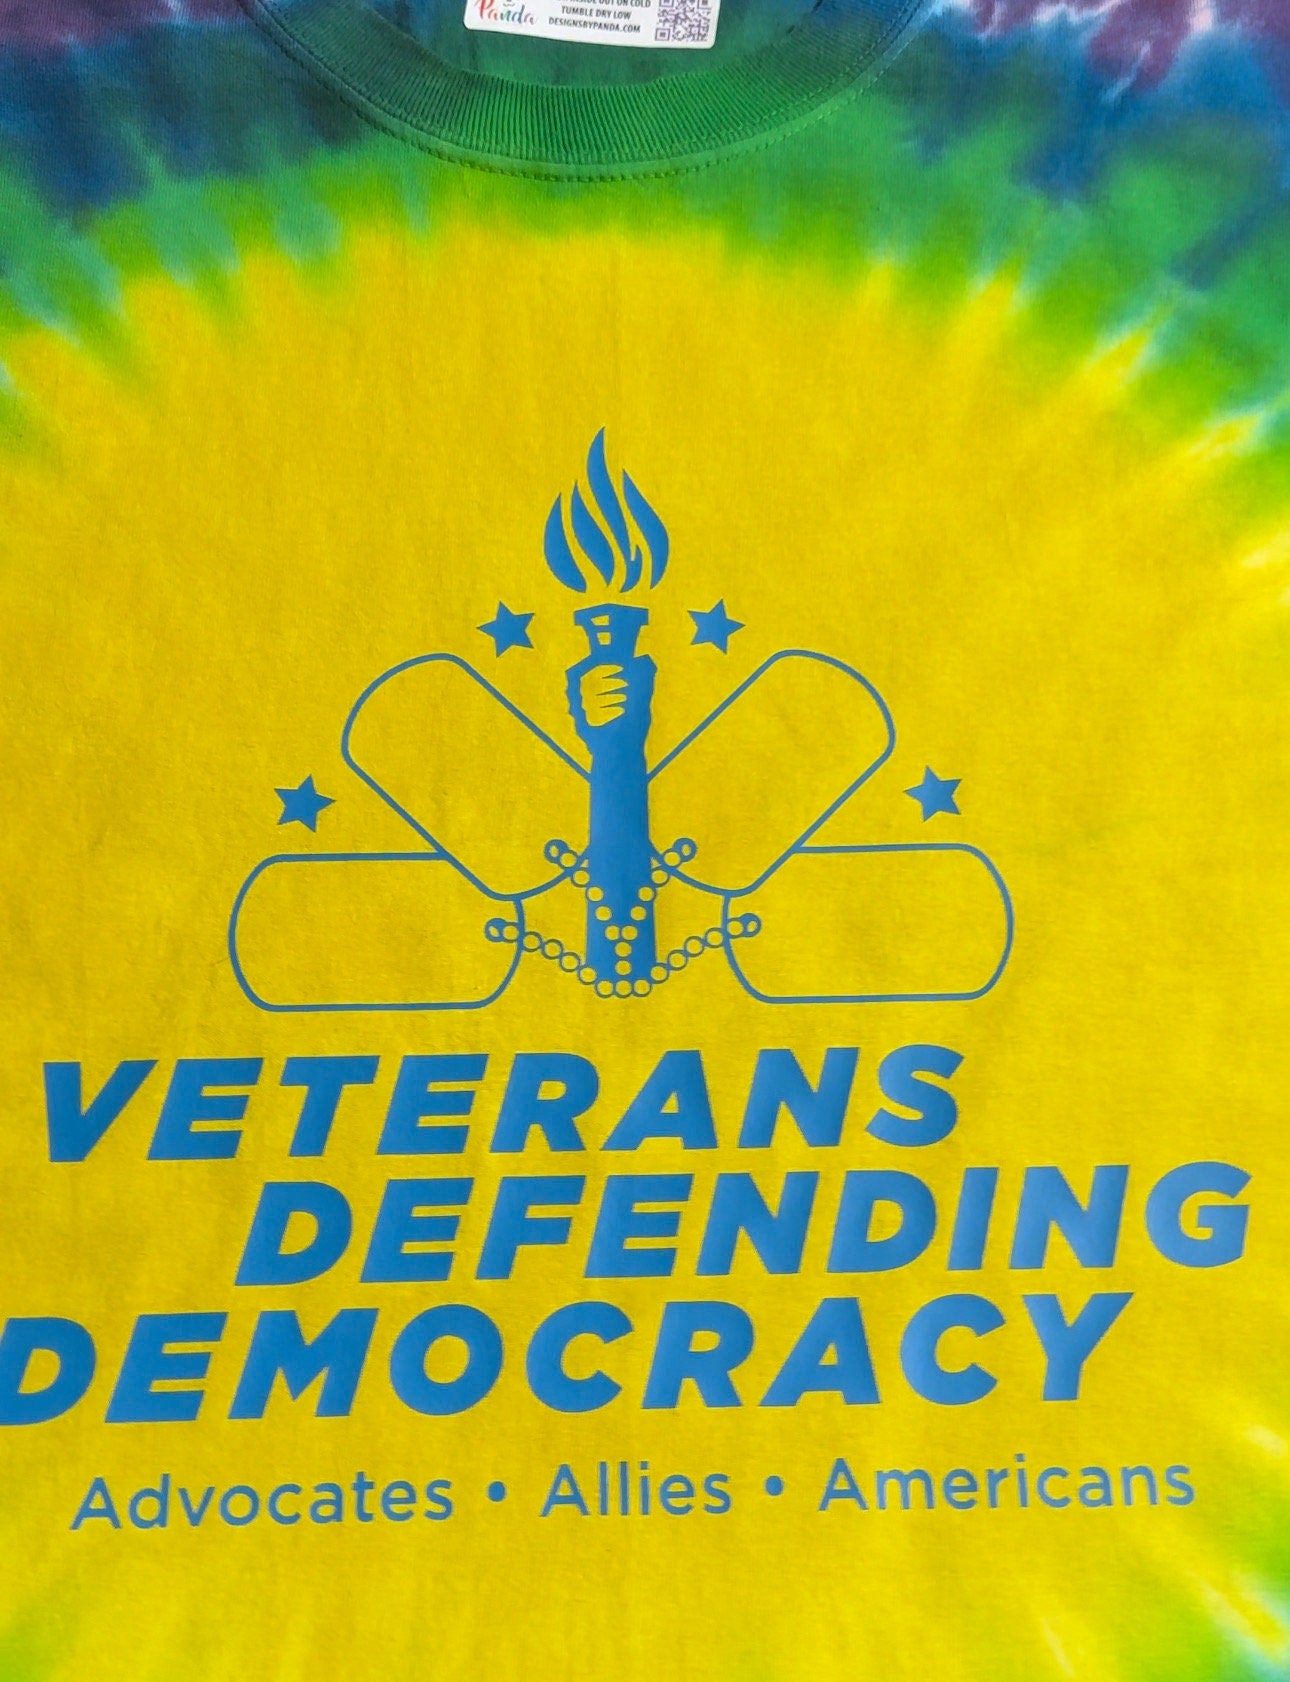 Proudly Defending Democracy Rainbow Tie Die Defense of Democracy T-shirt